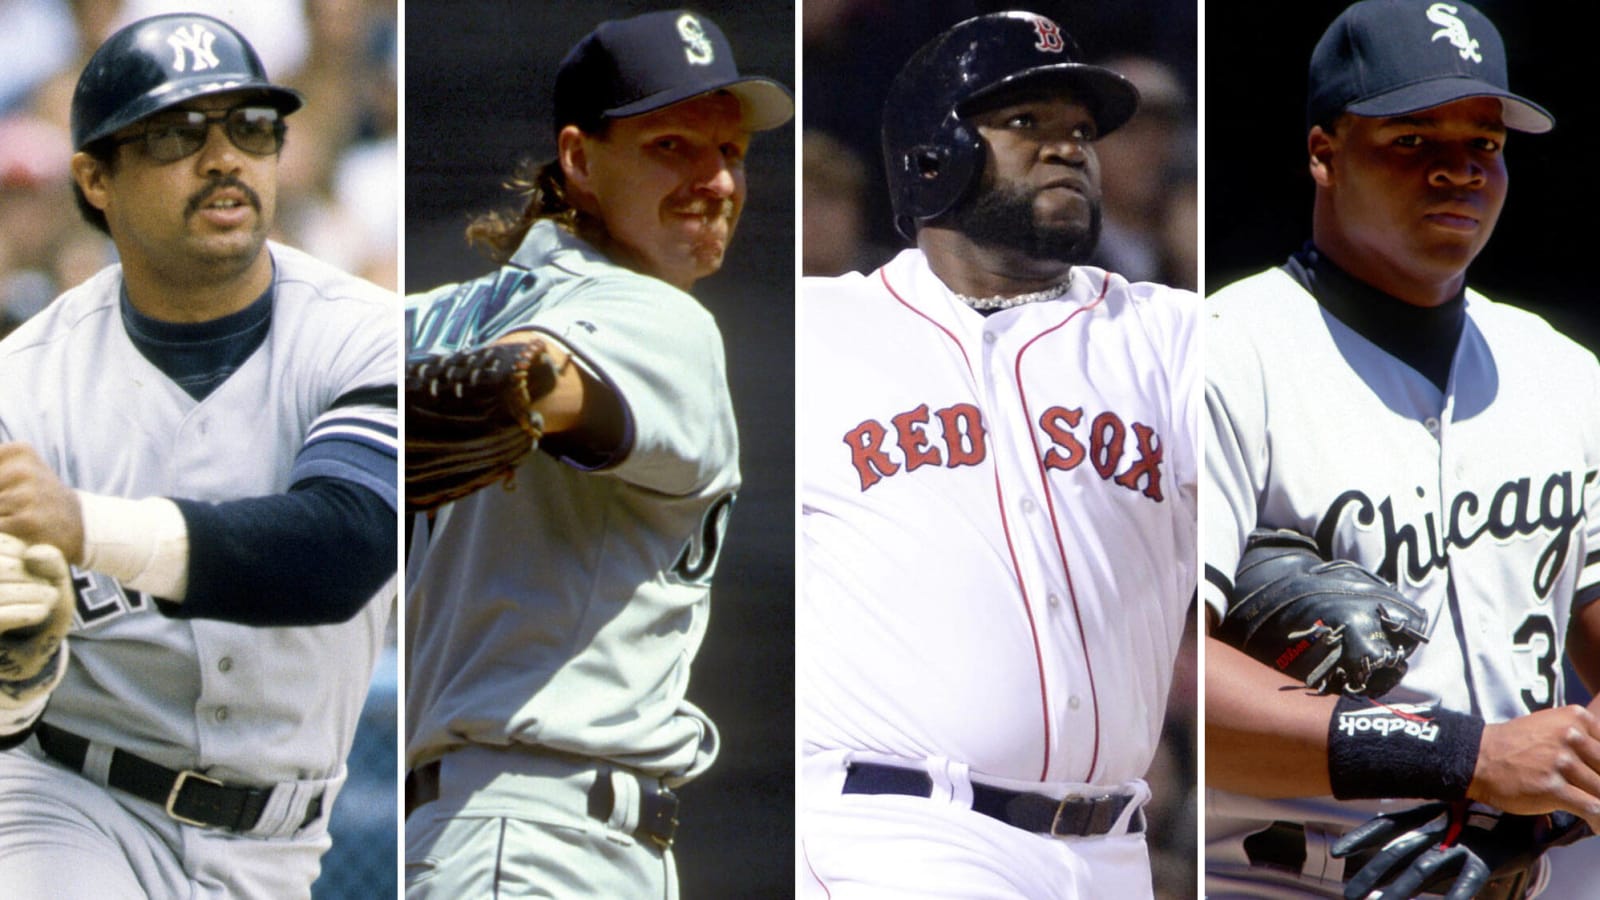 If MLB players' nicknames made sense (pt. 1) #mlb #funny #sports #base